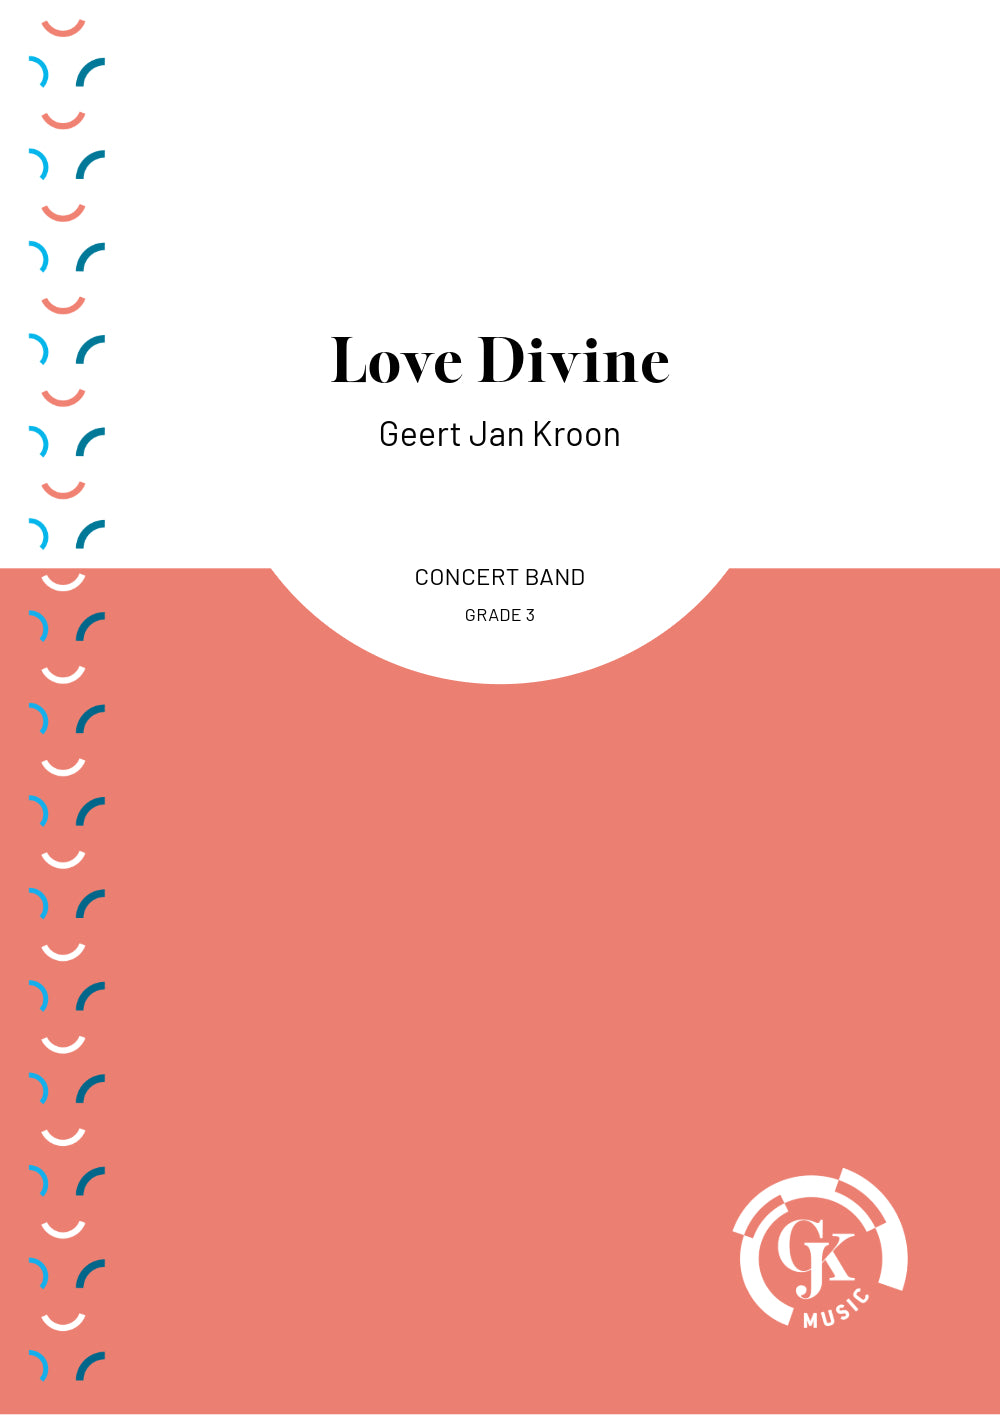 Love Divine - Concert Band